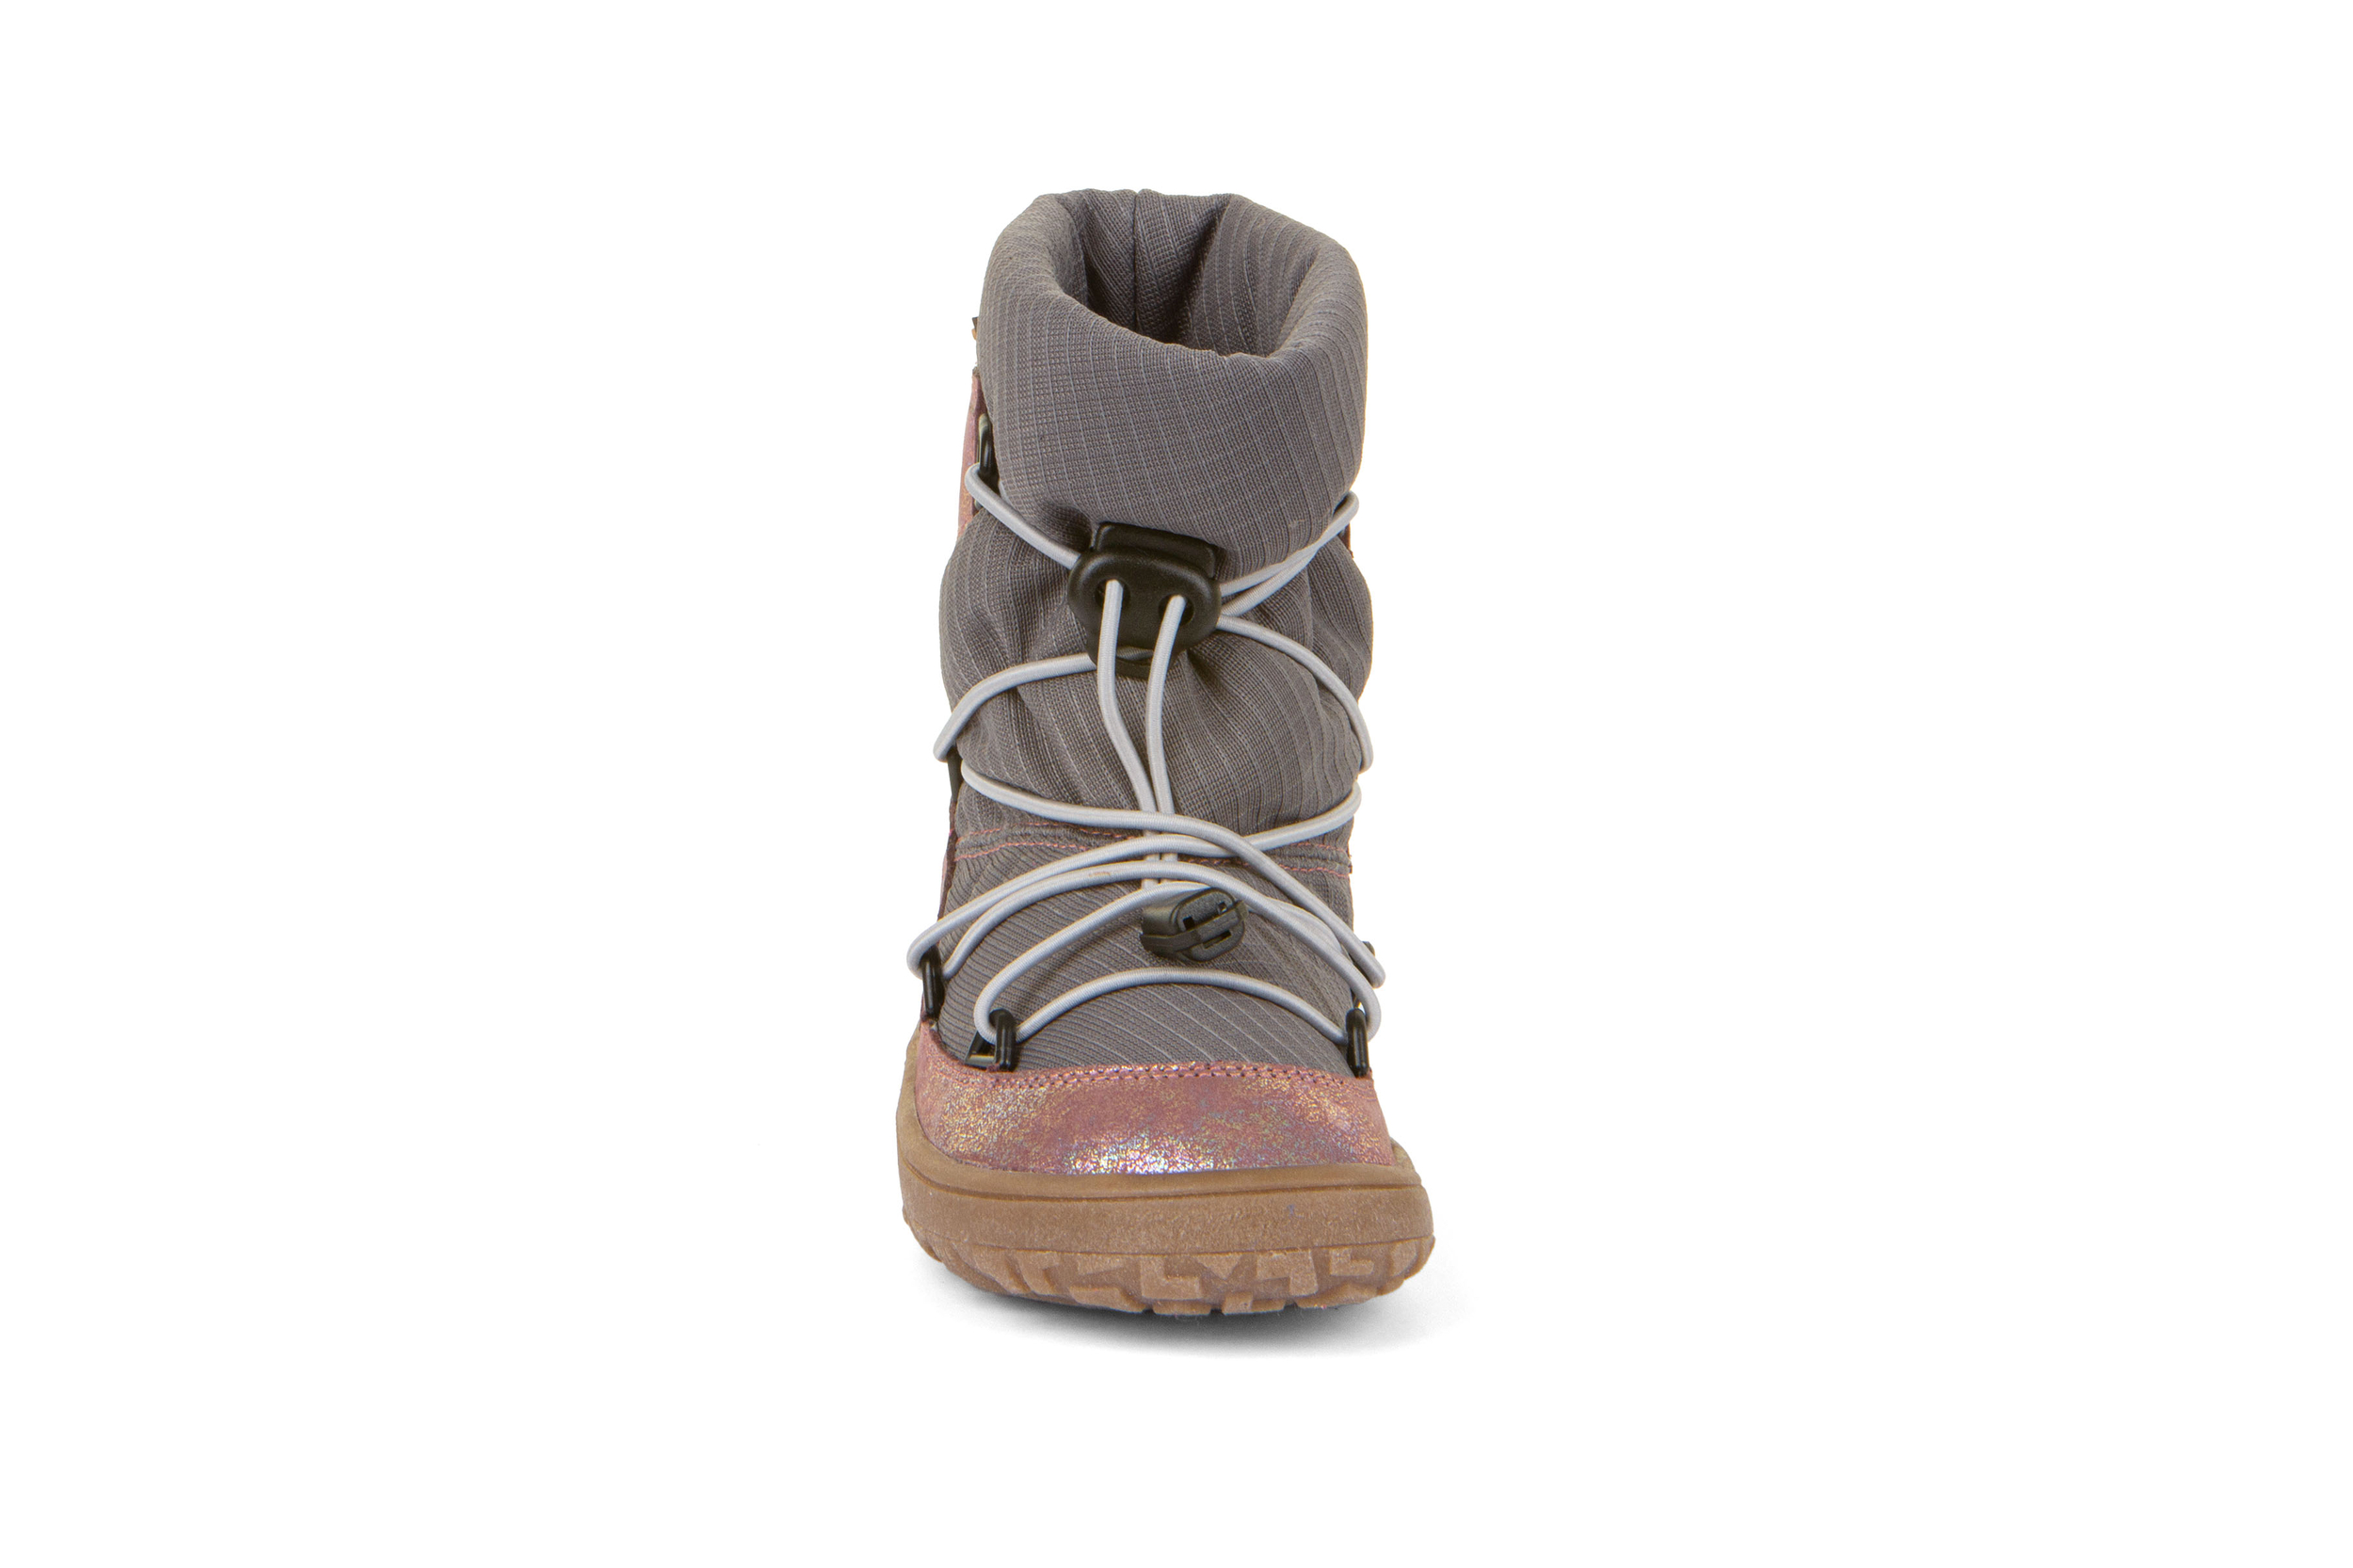 bottes de neige Froddo barefoot TEX TRACK WOOL pink shine G3160212-7 sur la boutique Liberty Pieds (5)